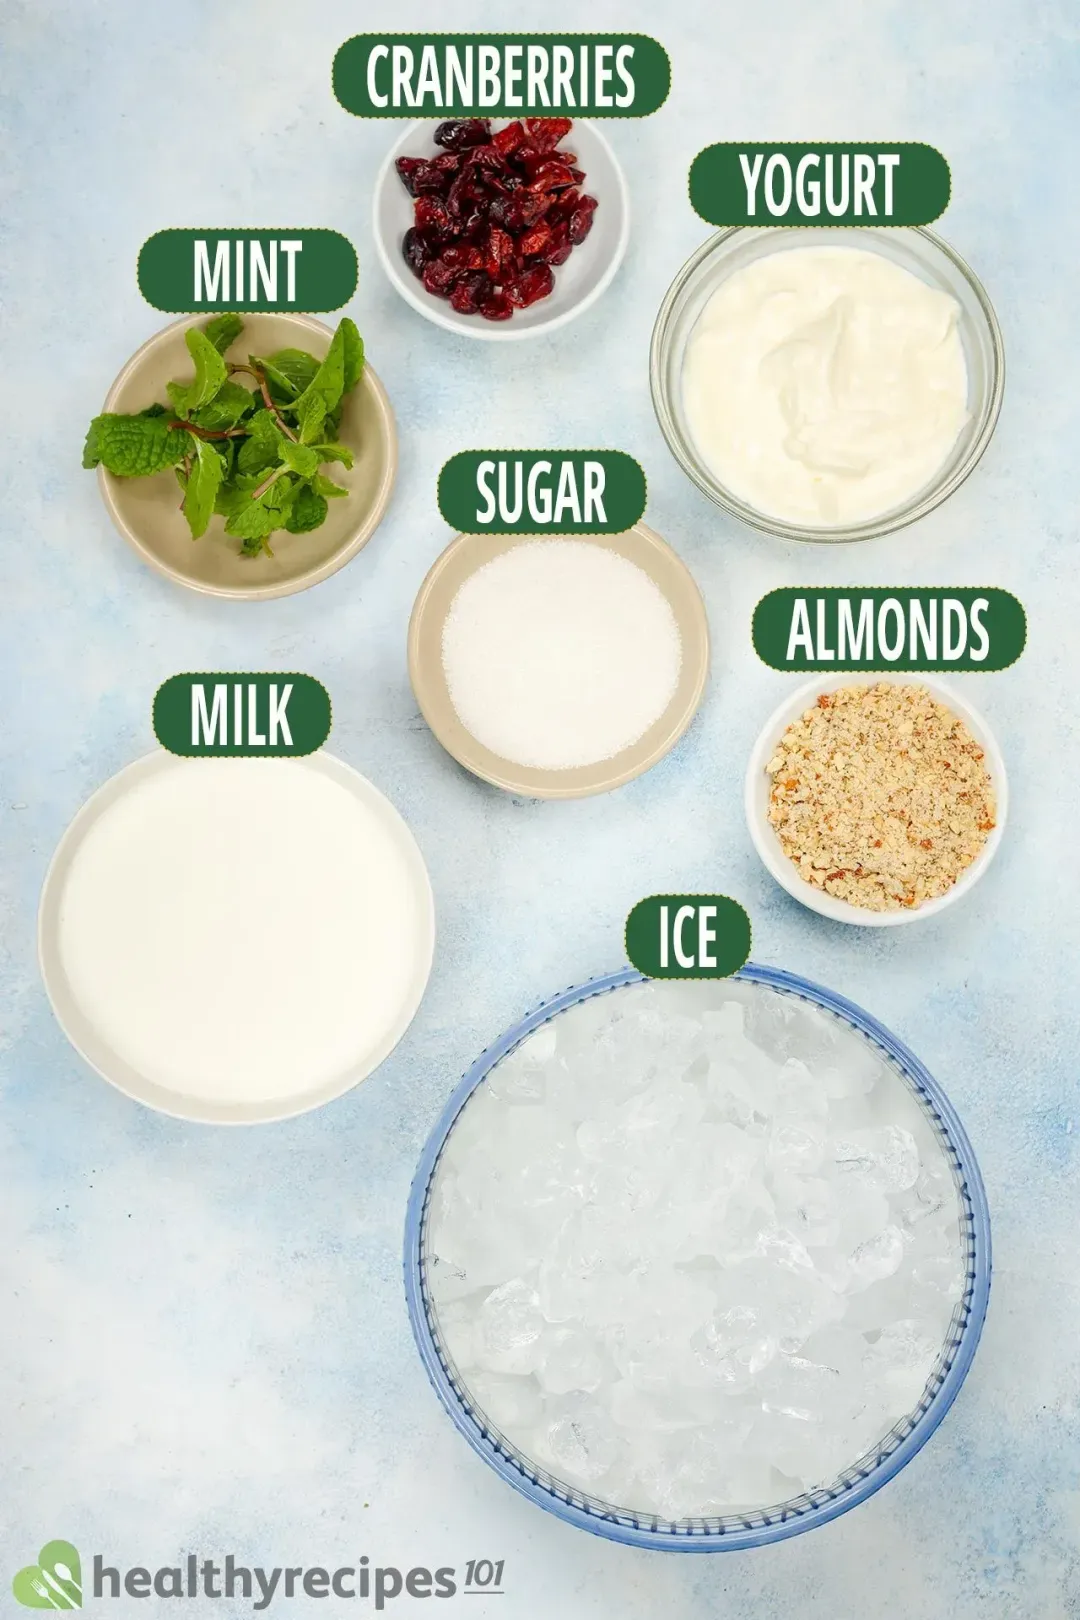 Ingredients for Yogurt Smoothie